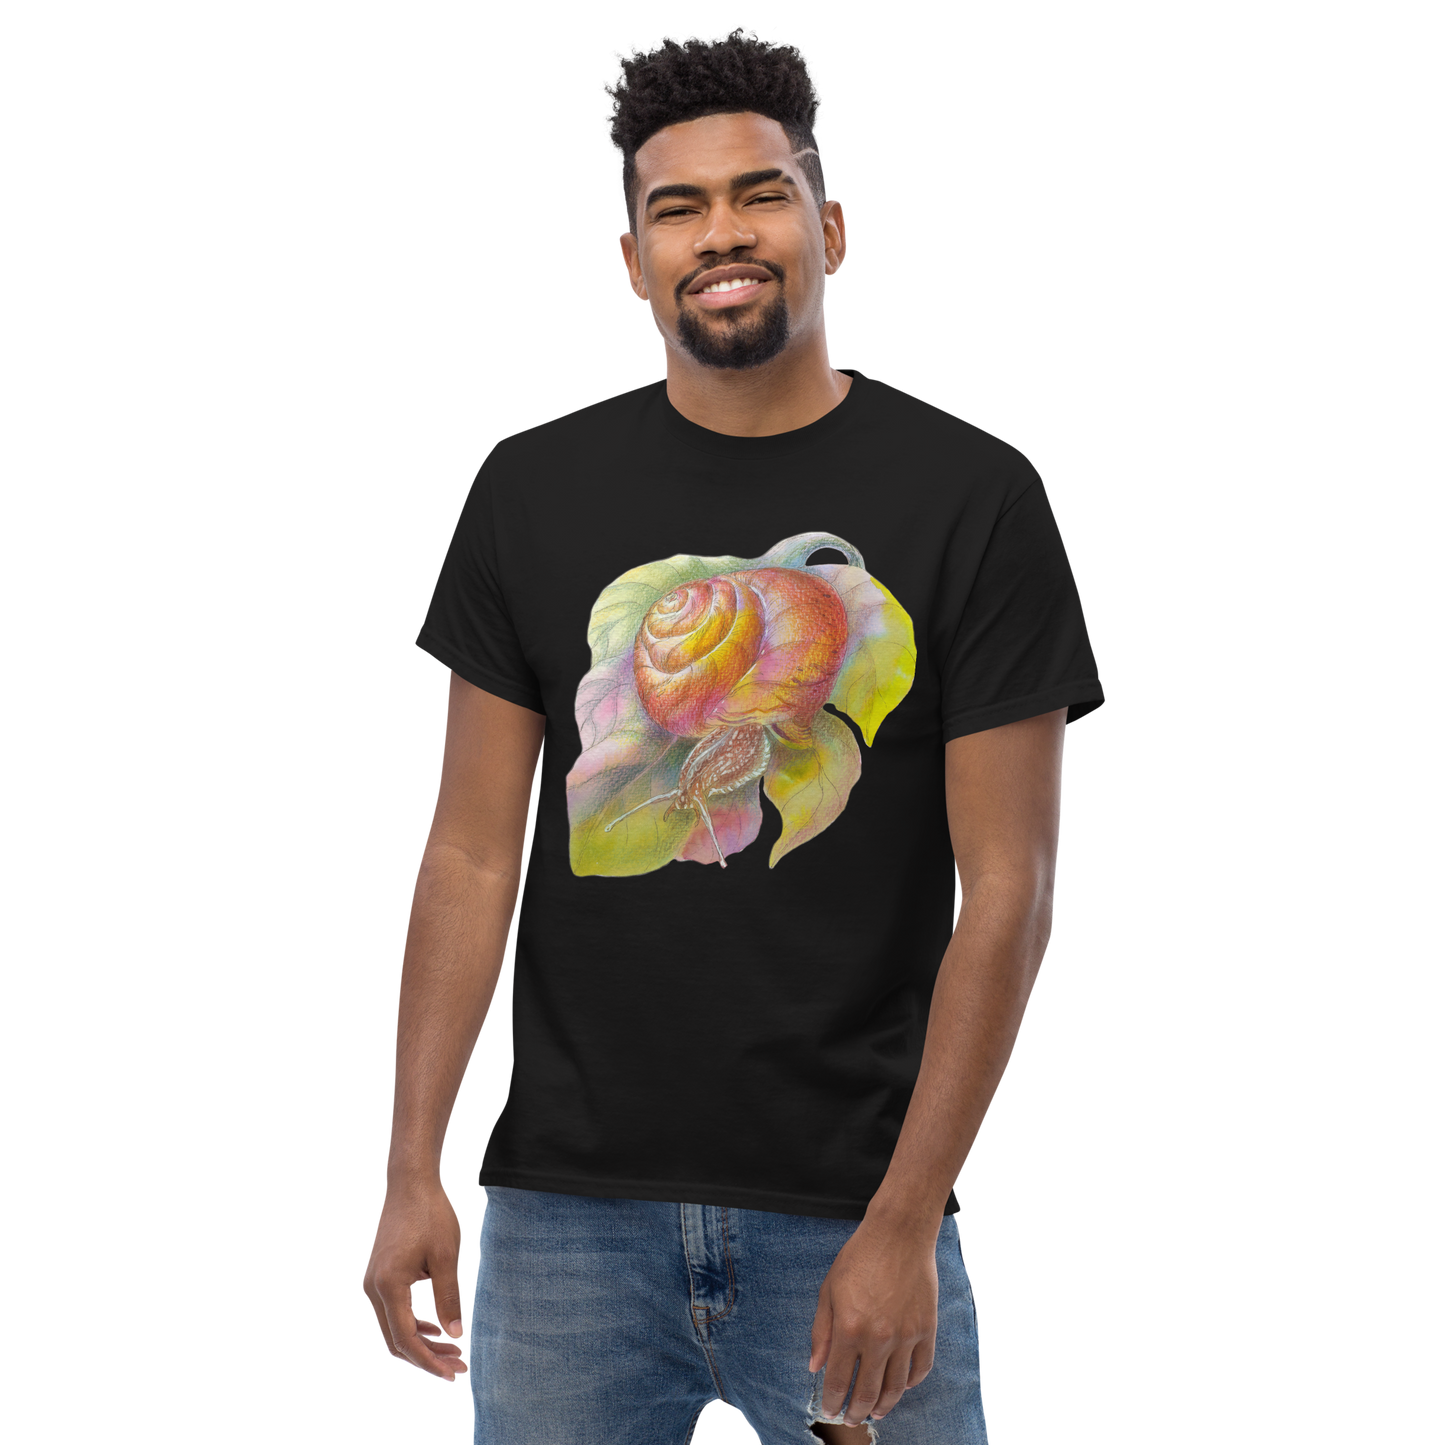 Snail-o T-shirt